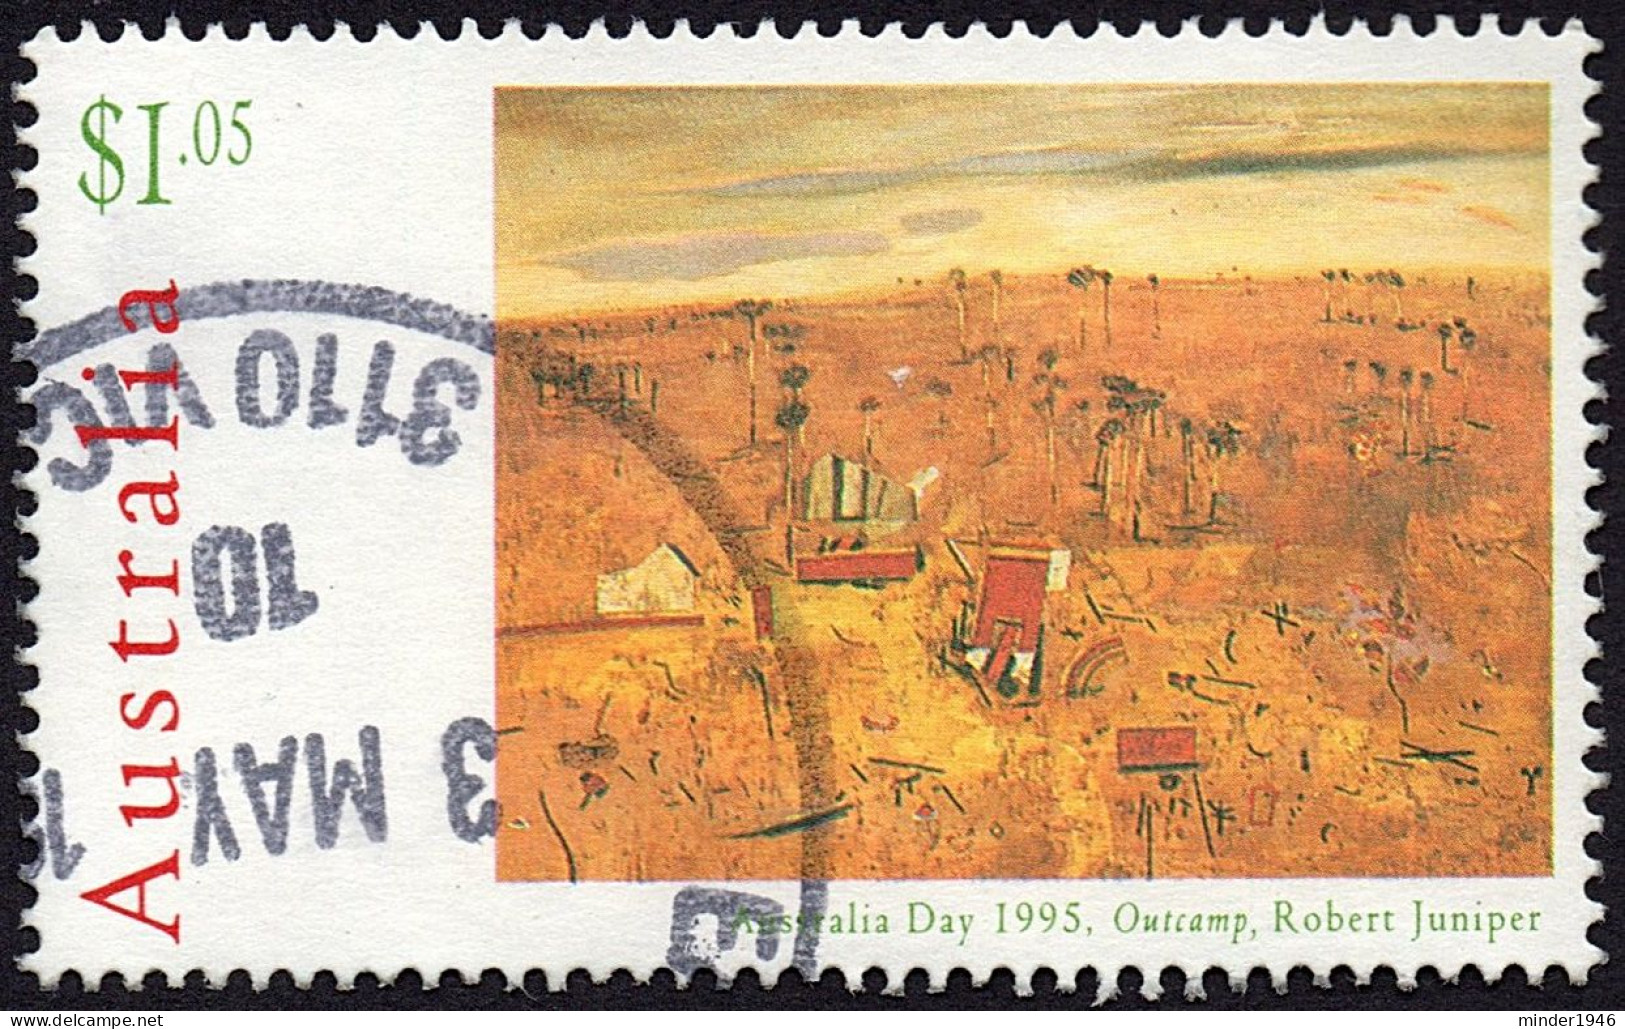 AUSTRALIA 1995 QEII $1.05 Multicoloured, Australia Day-Outcamp Robert Juniper FU - Used Stamps